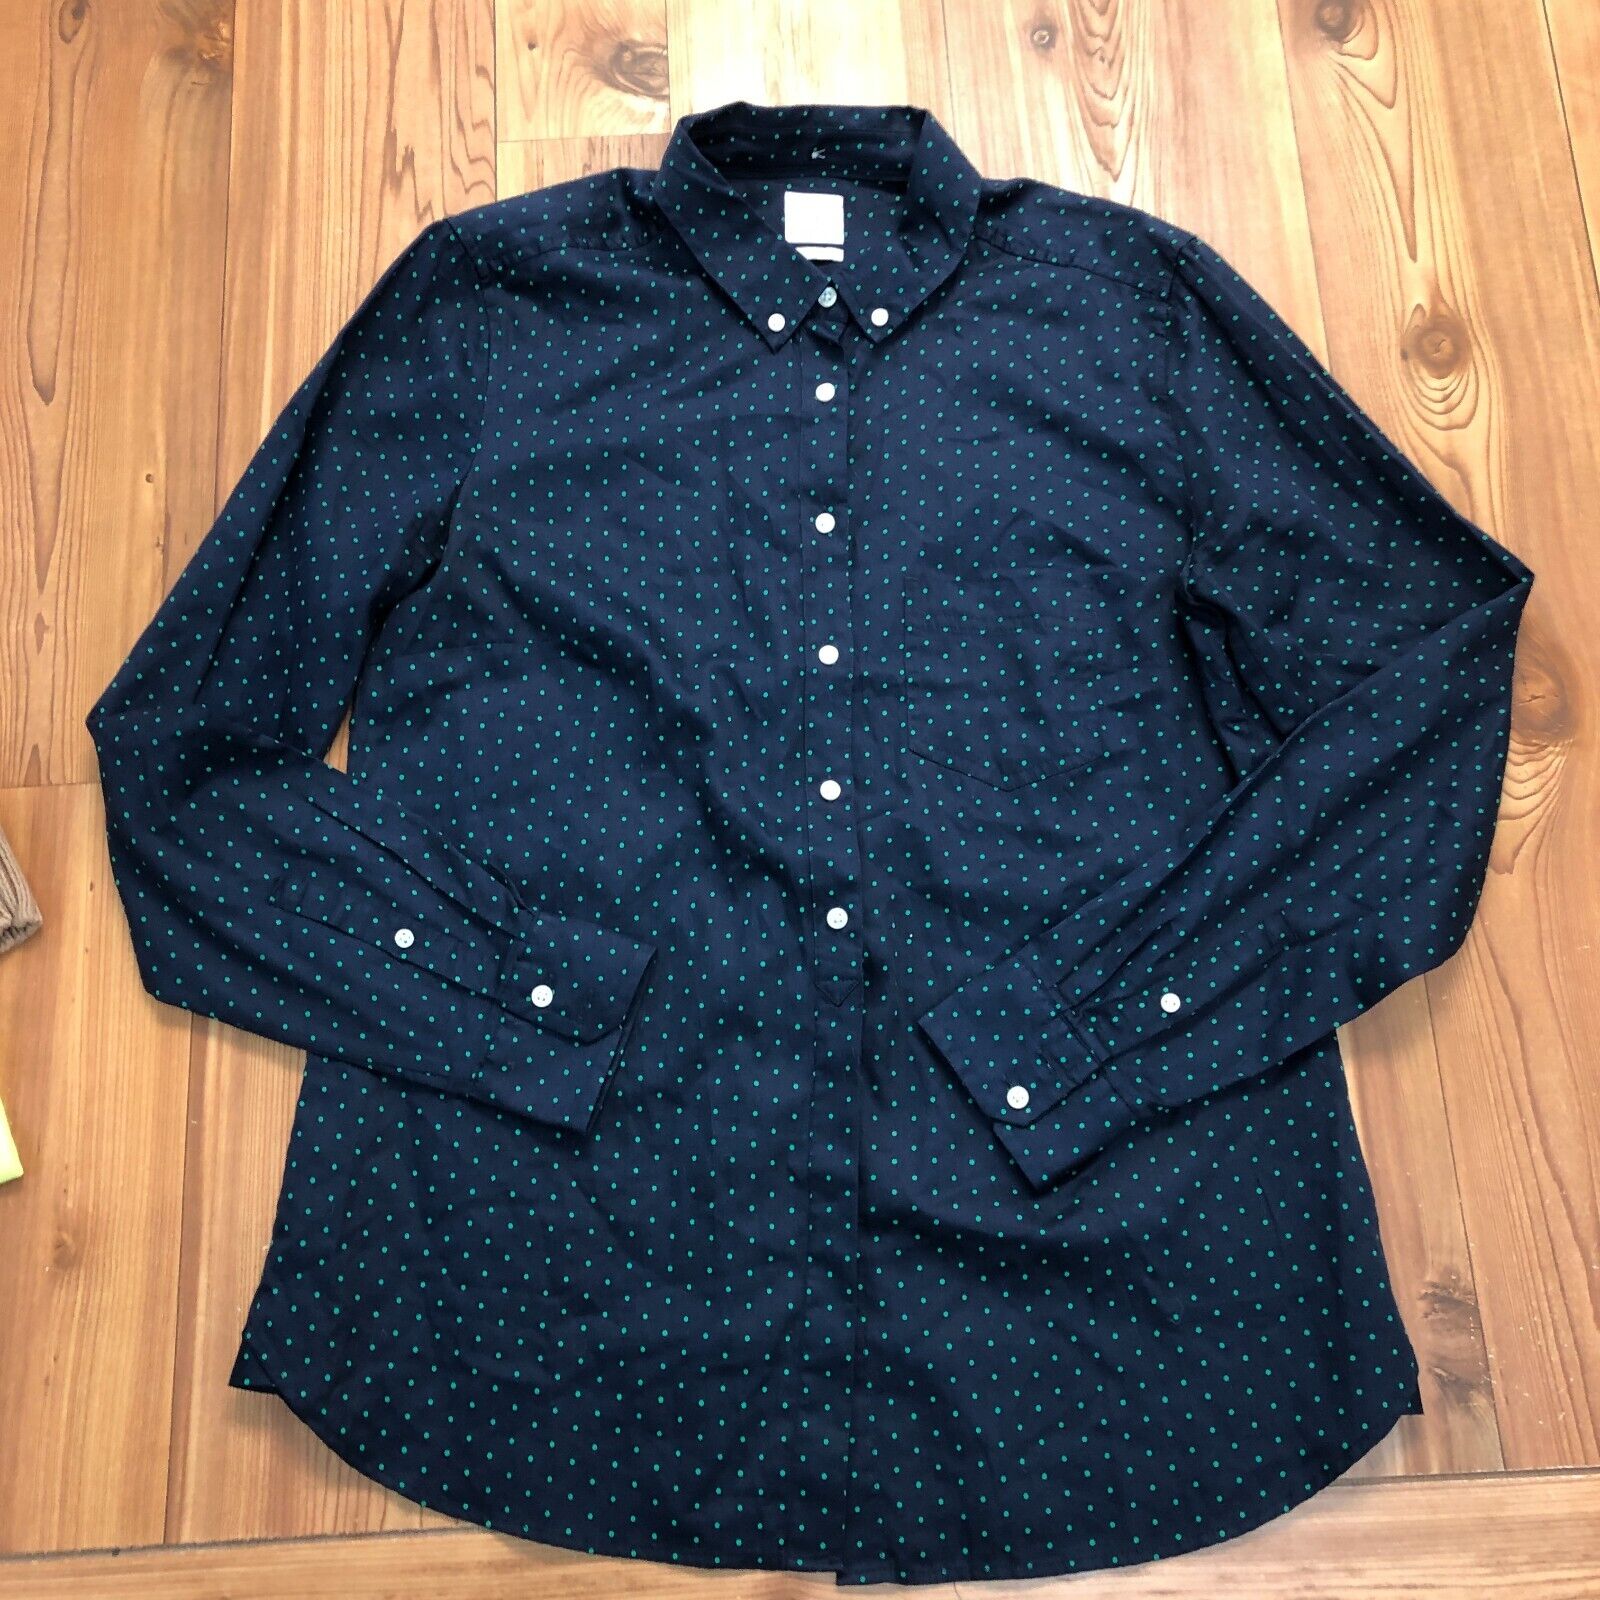 Gap Blue Polka Dot Button Up Long Sleeve Cotton Shirt Adult Size MT